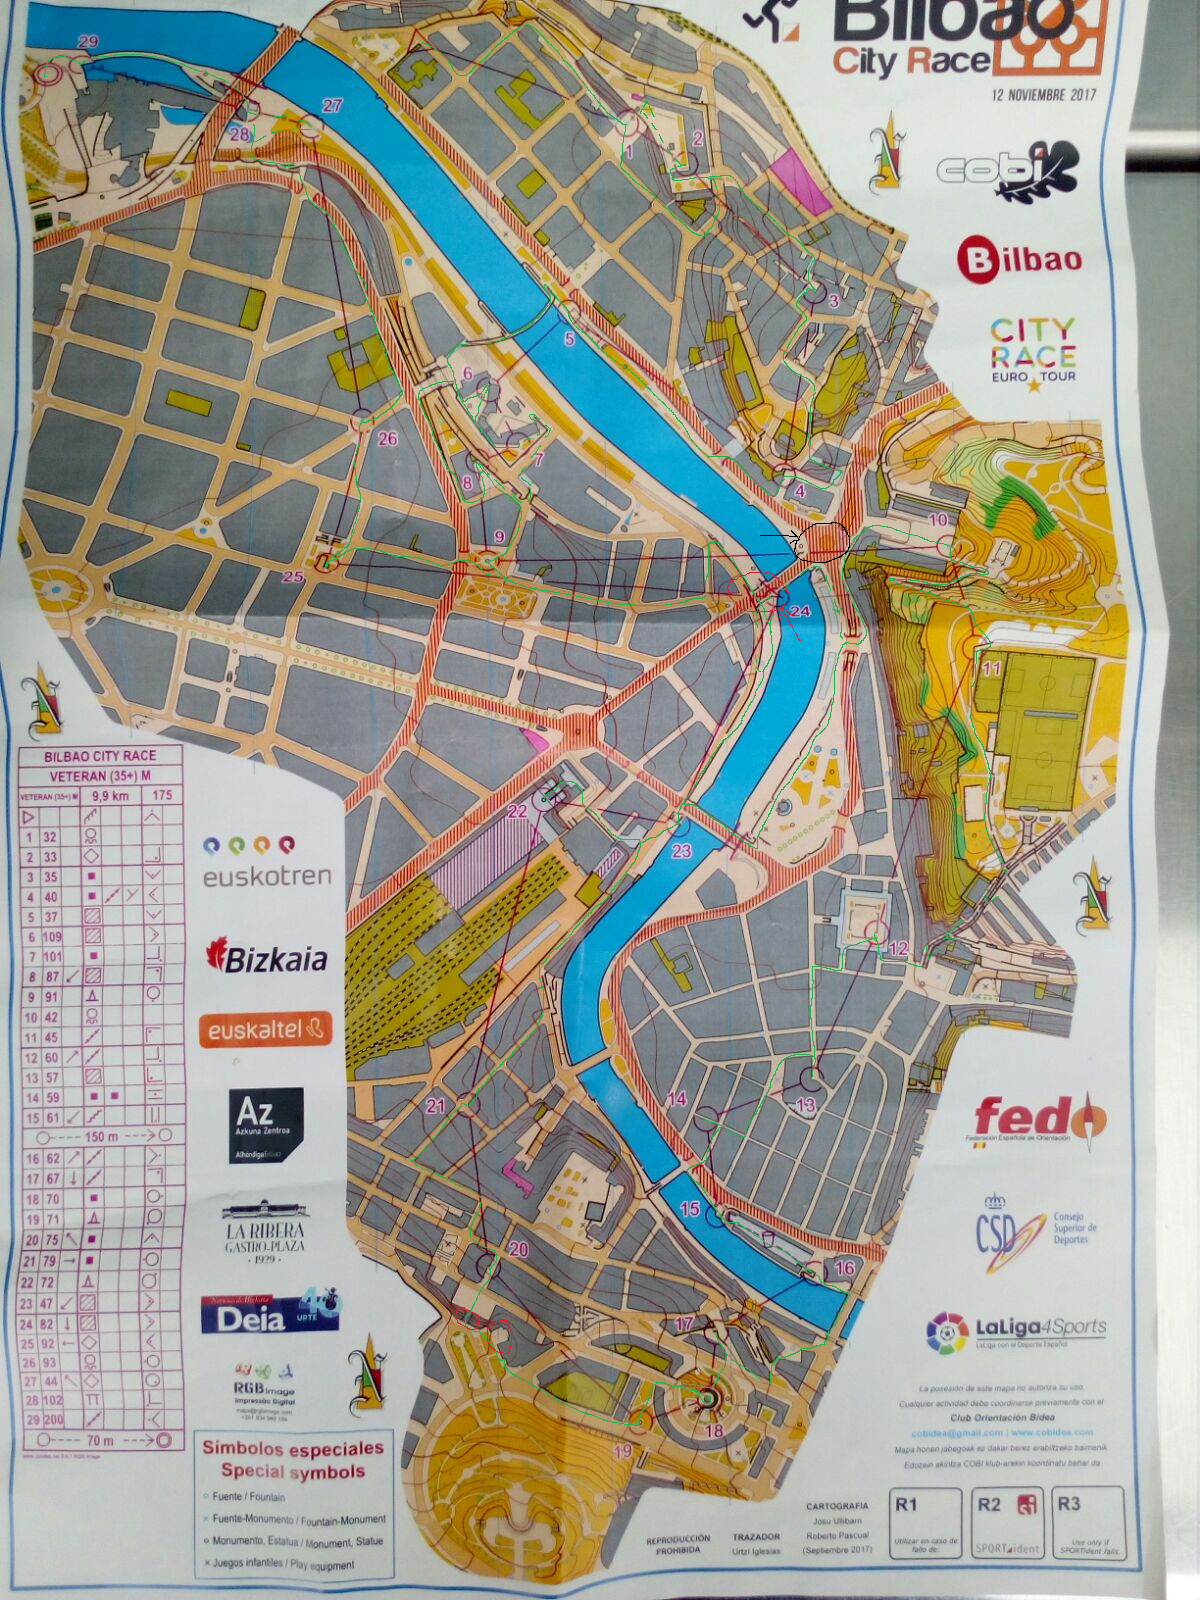 Bilbao City Race (16-11-2017)